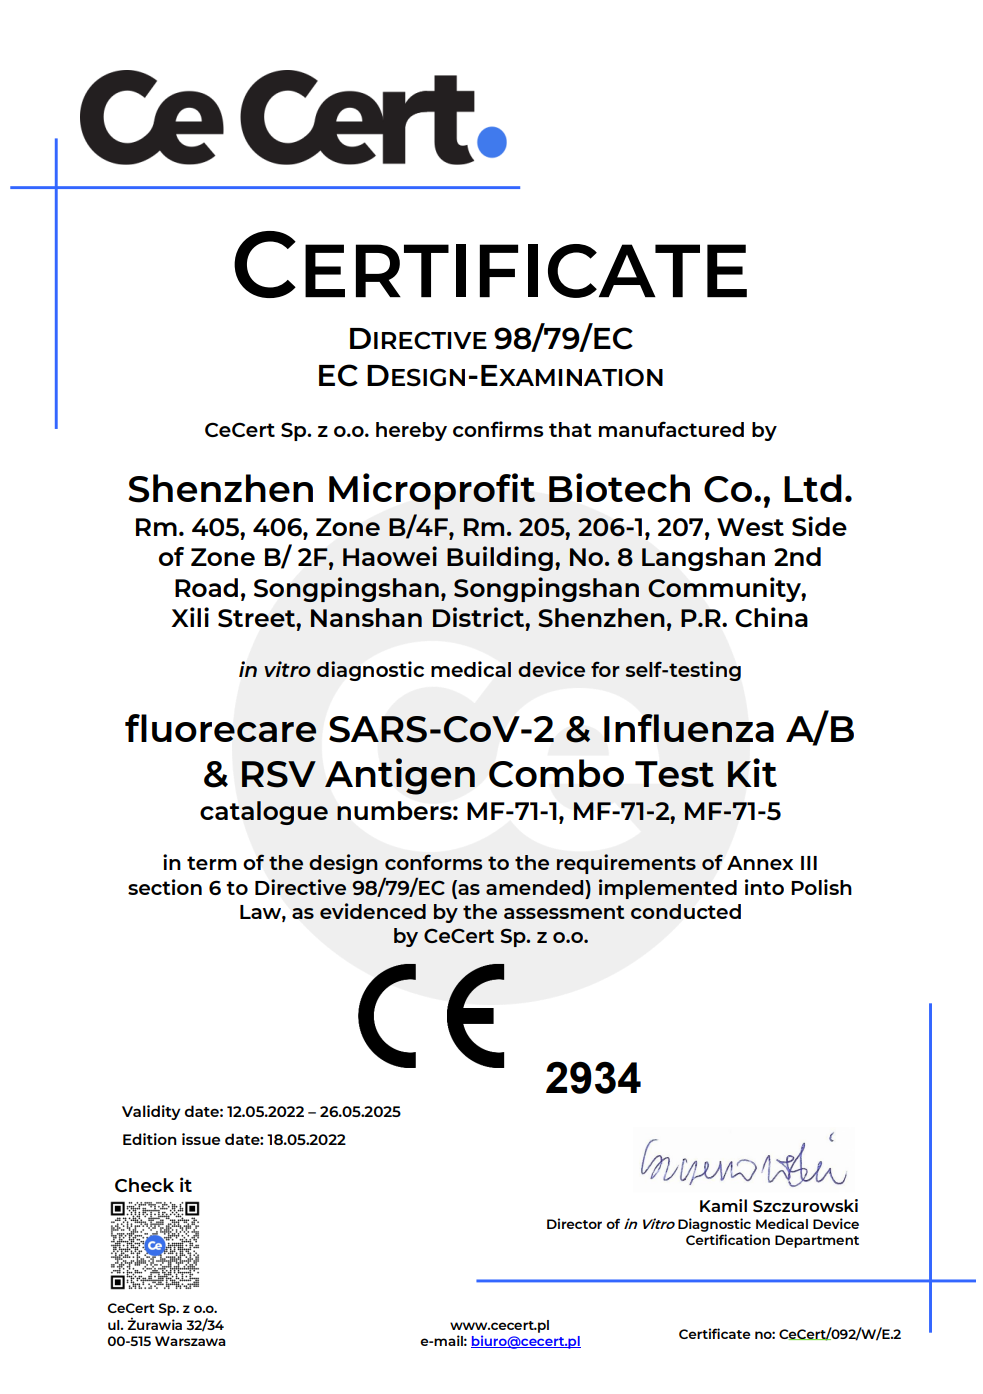 SOLMIRA® SARS-CoV-2 & Influenza A/B & RSV Antigen Combo Test Kit, 1 Test